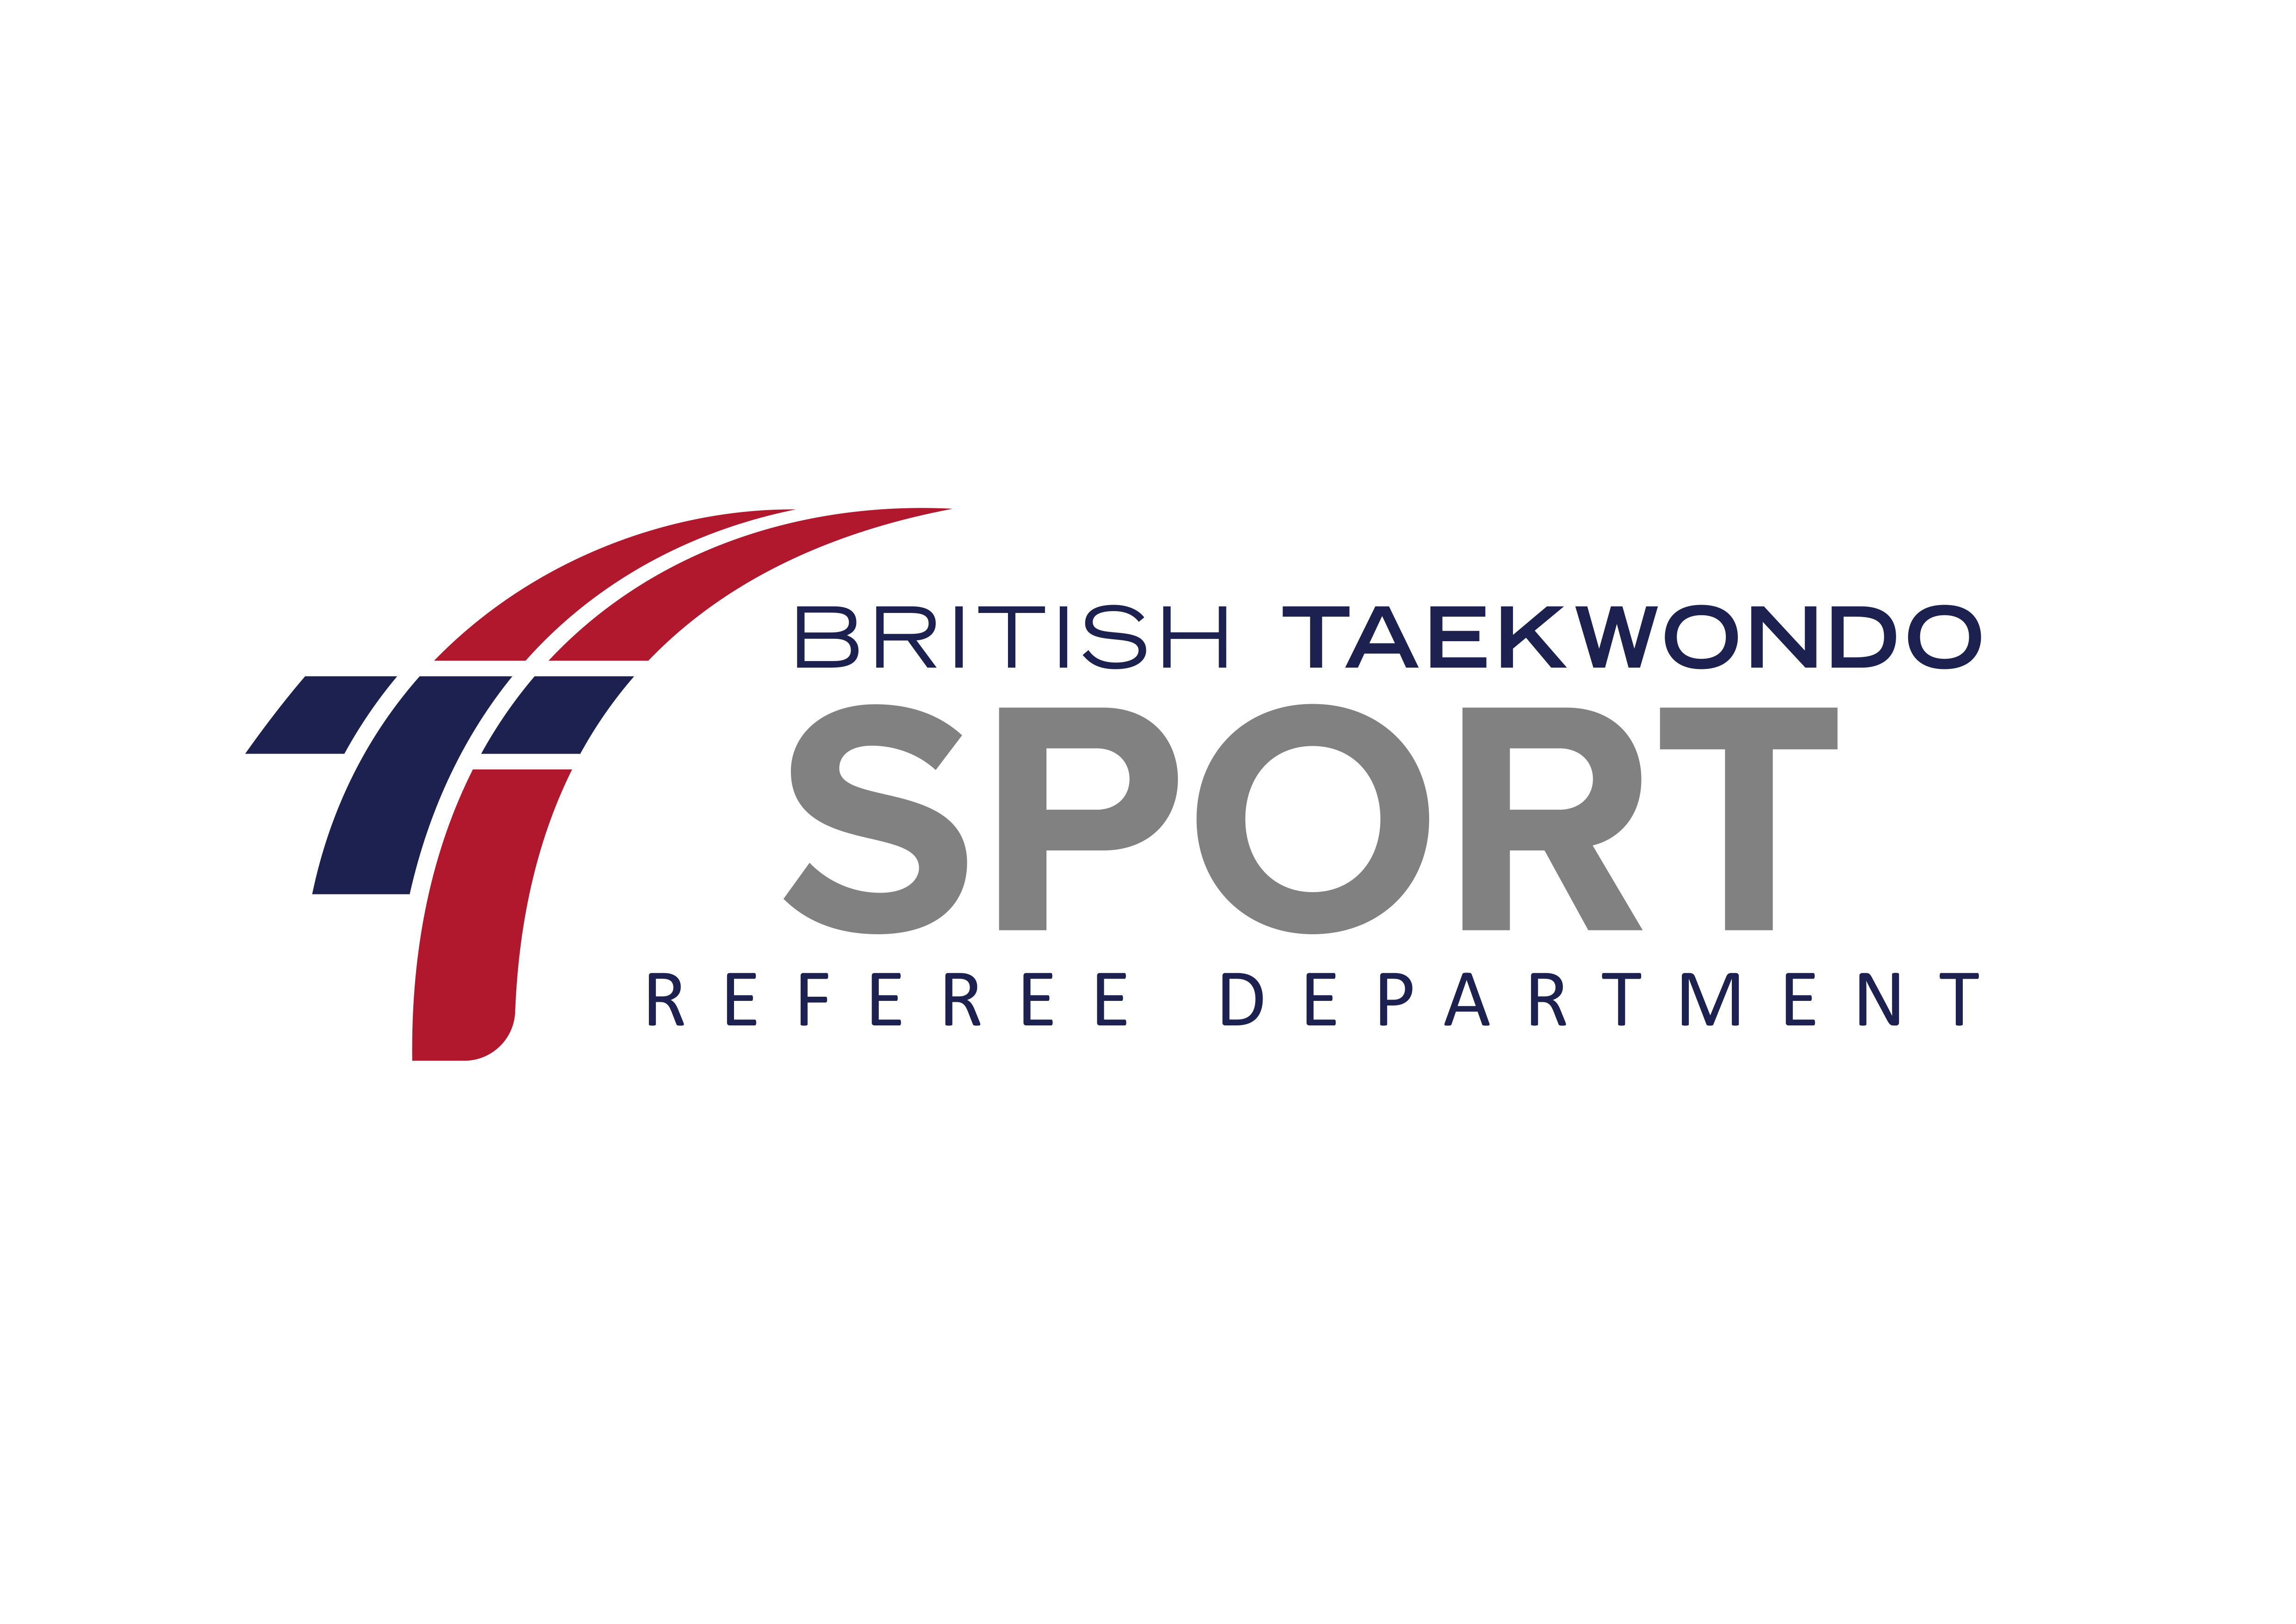 British Taekwondo Sport Referee Department logo